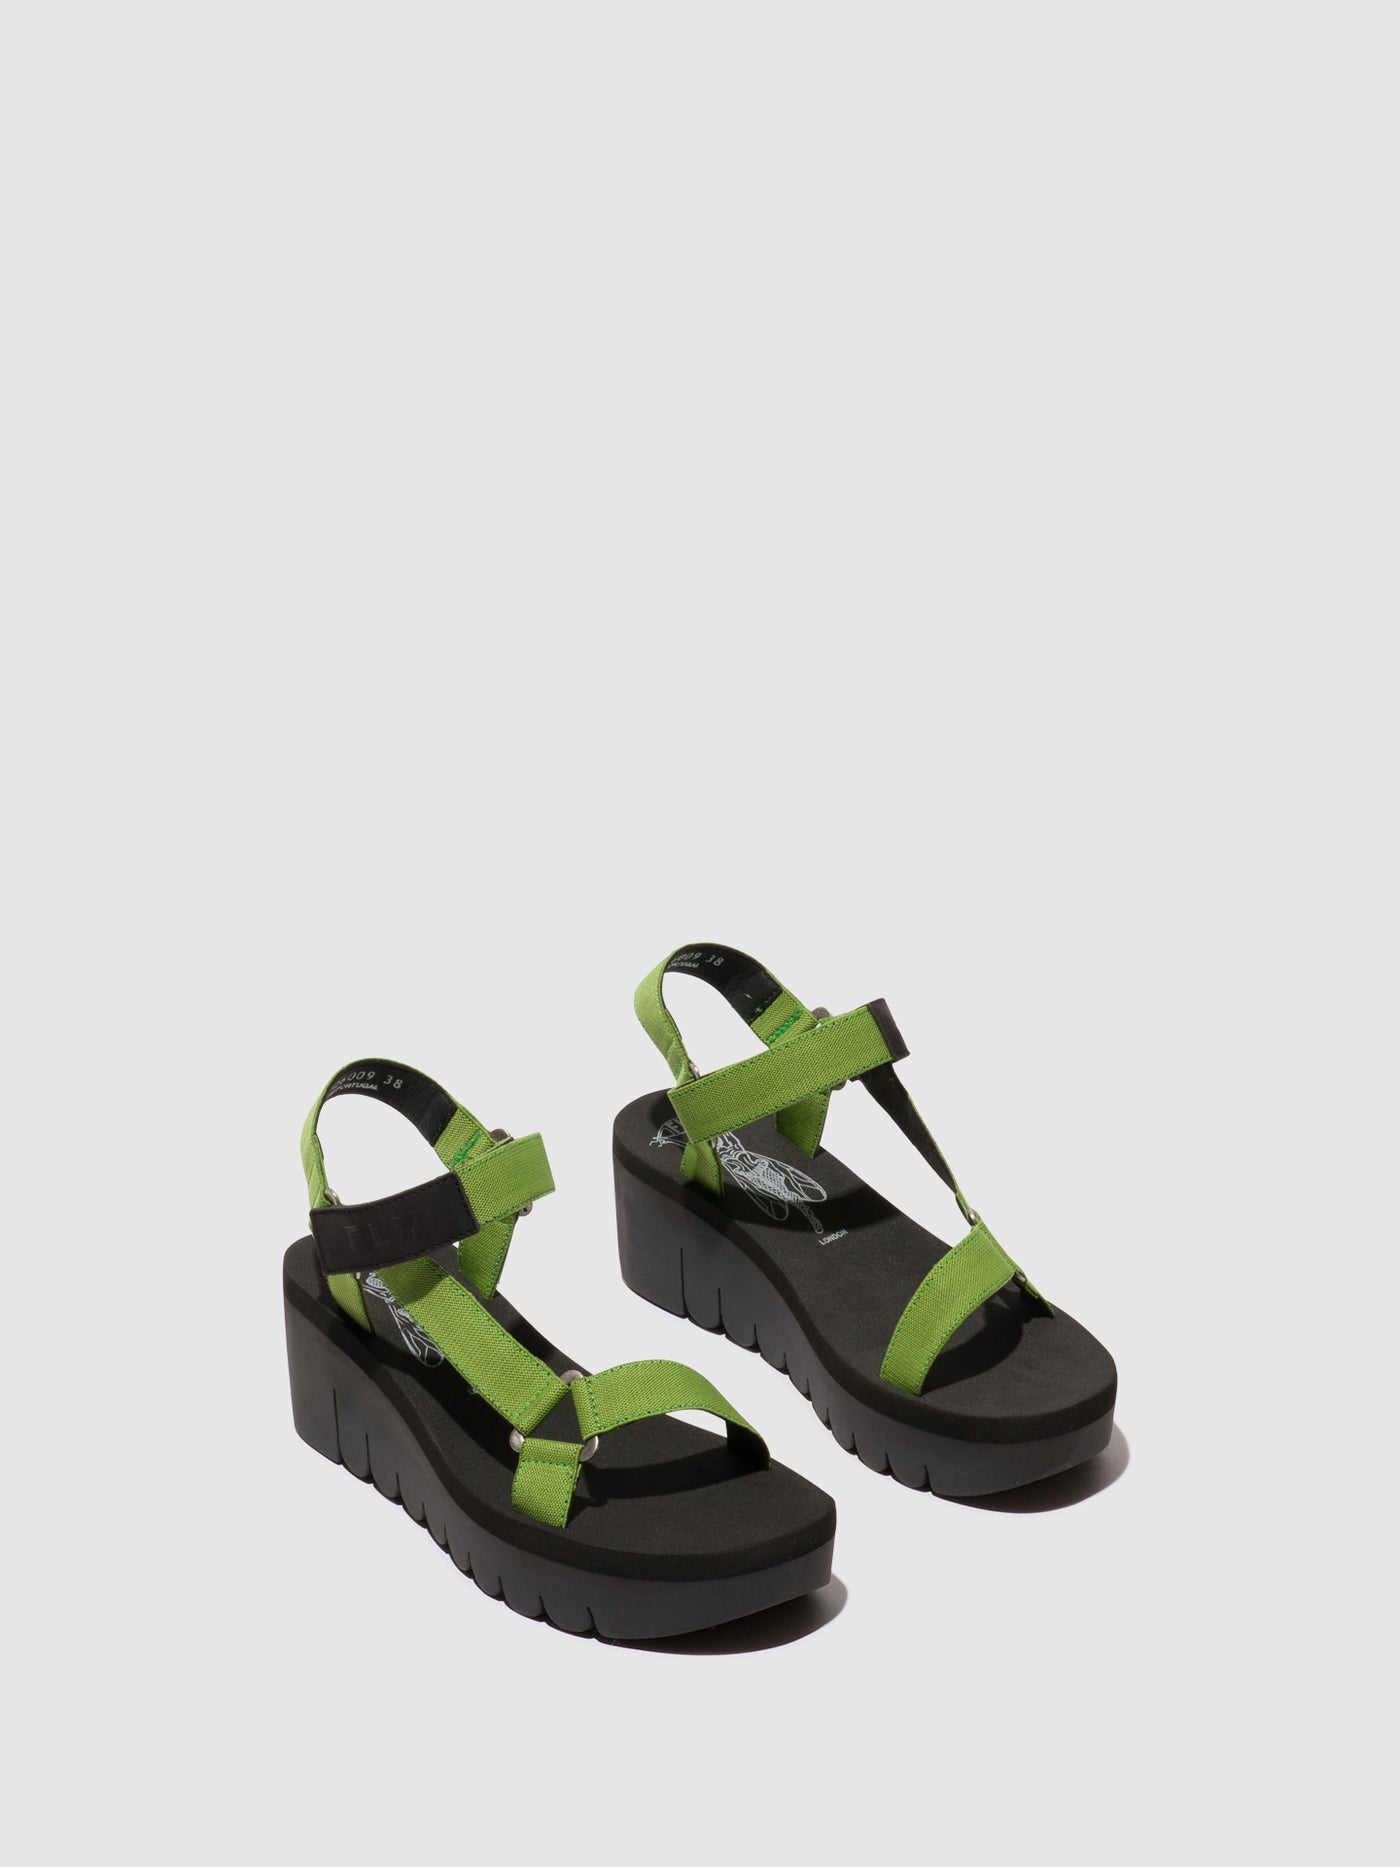 Velcro Sandals YEFA726FLY BLACK/AVOCADO (BLACK